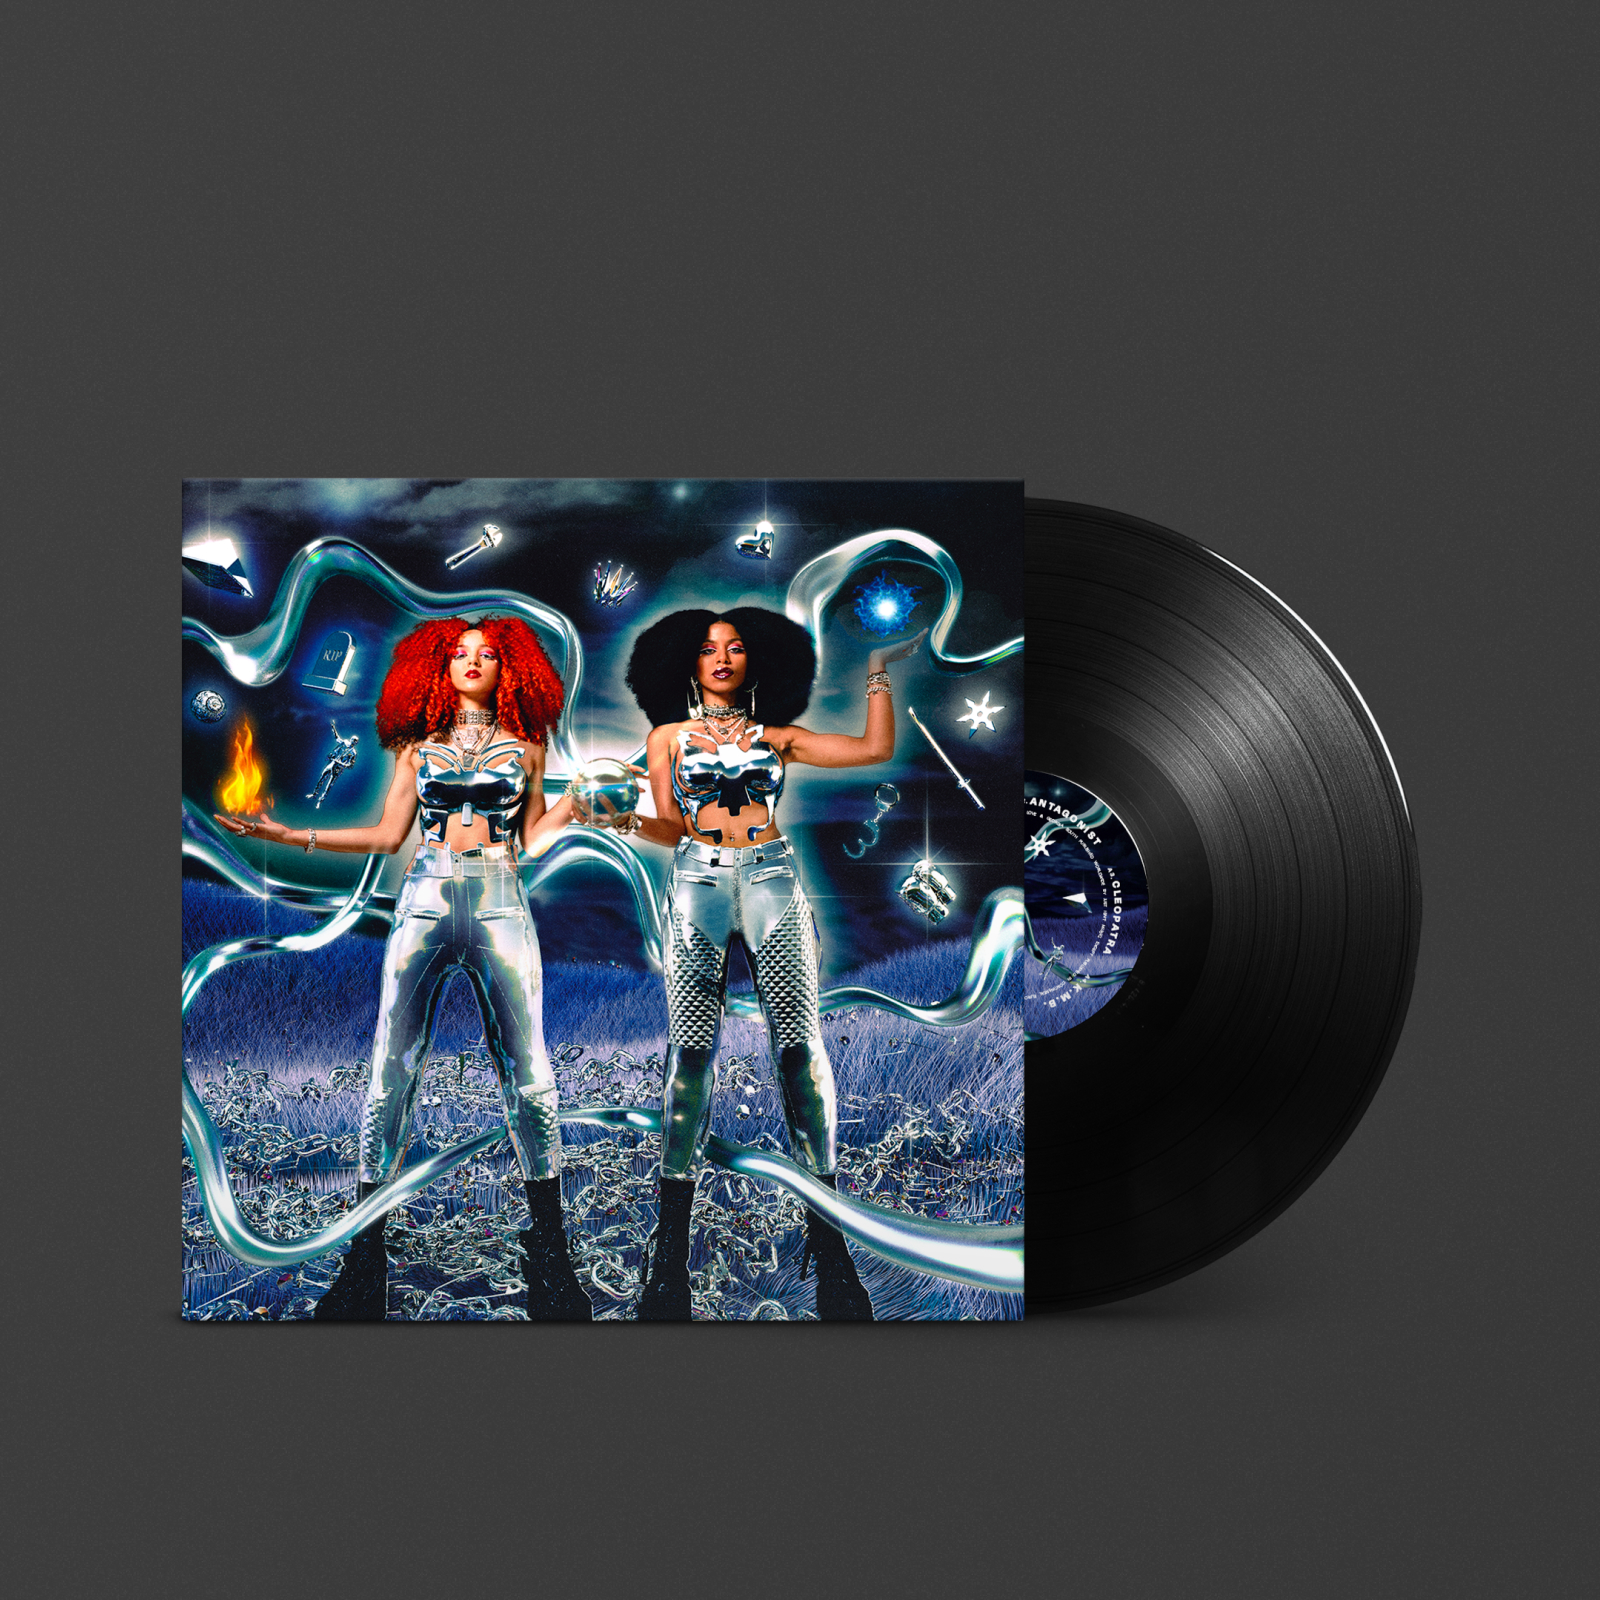 Supernova black vinyl by Nova Twins